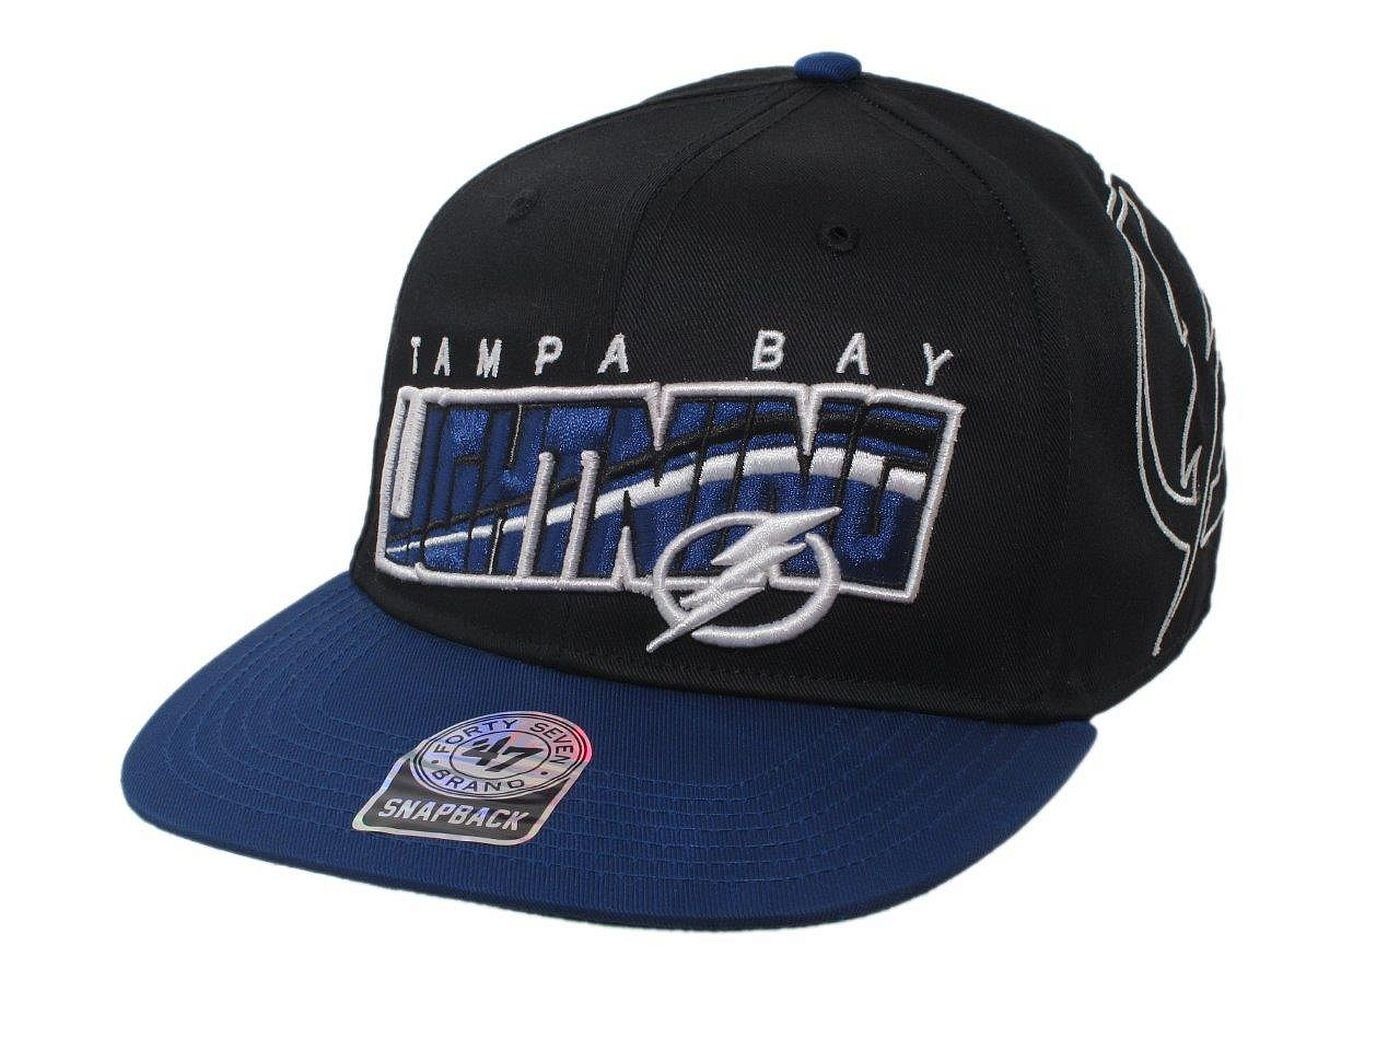 '47 Brand Baseball Cap 47 Brand - NHL Cap Basecap Kappe Mütze Eishockey "Tampa Bay" (Nr. 89)